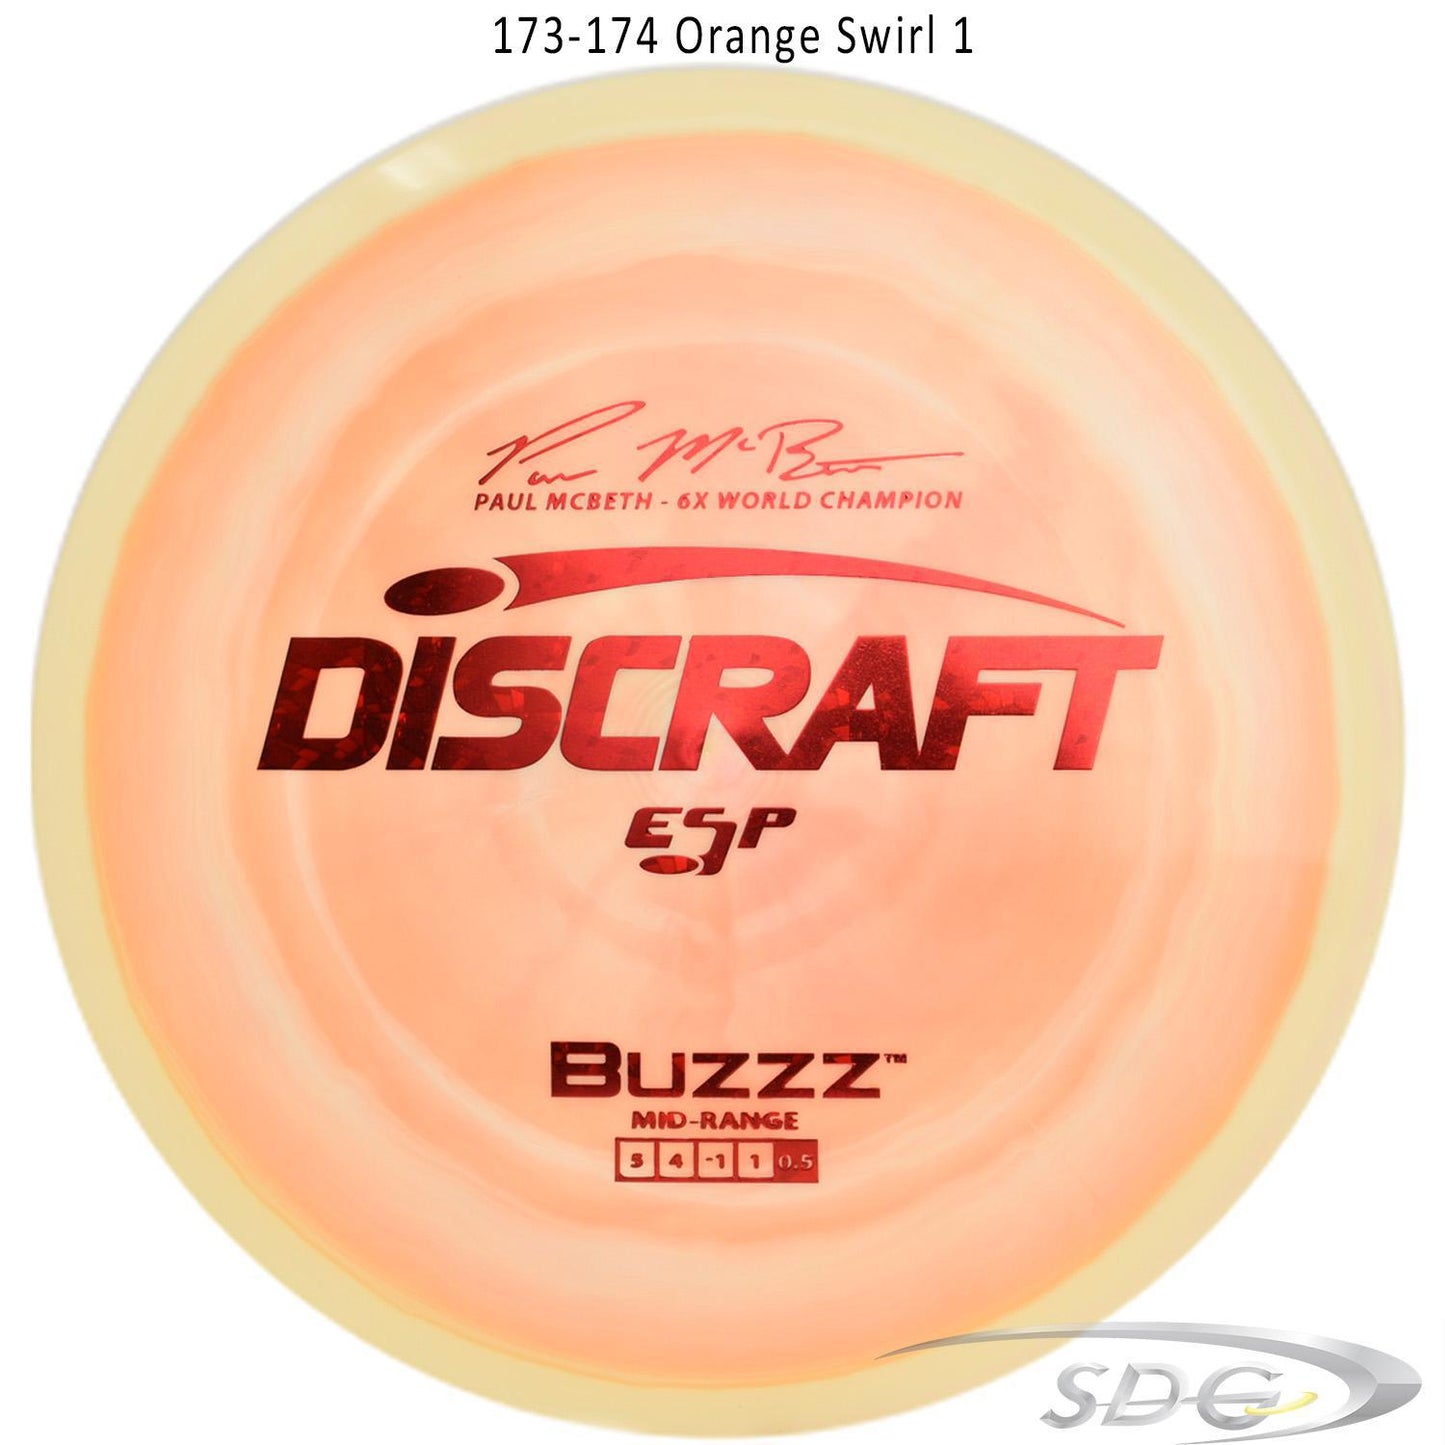 discraft-esp-buzzz-6x-paul-mcbeth-signature-series-disc-golf-mid-range-176-173-weights 173-174 Orange Swirl 1 